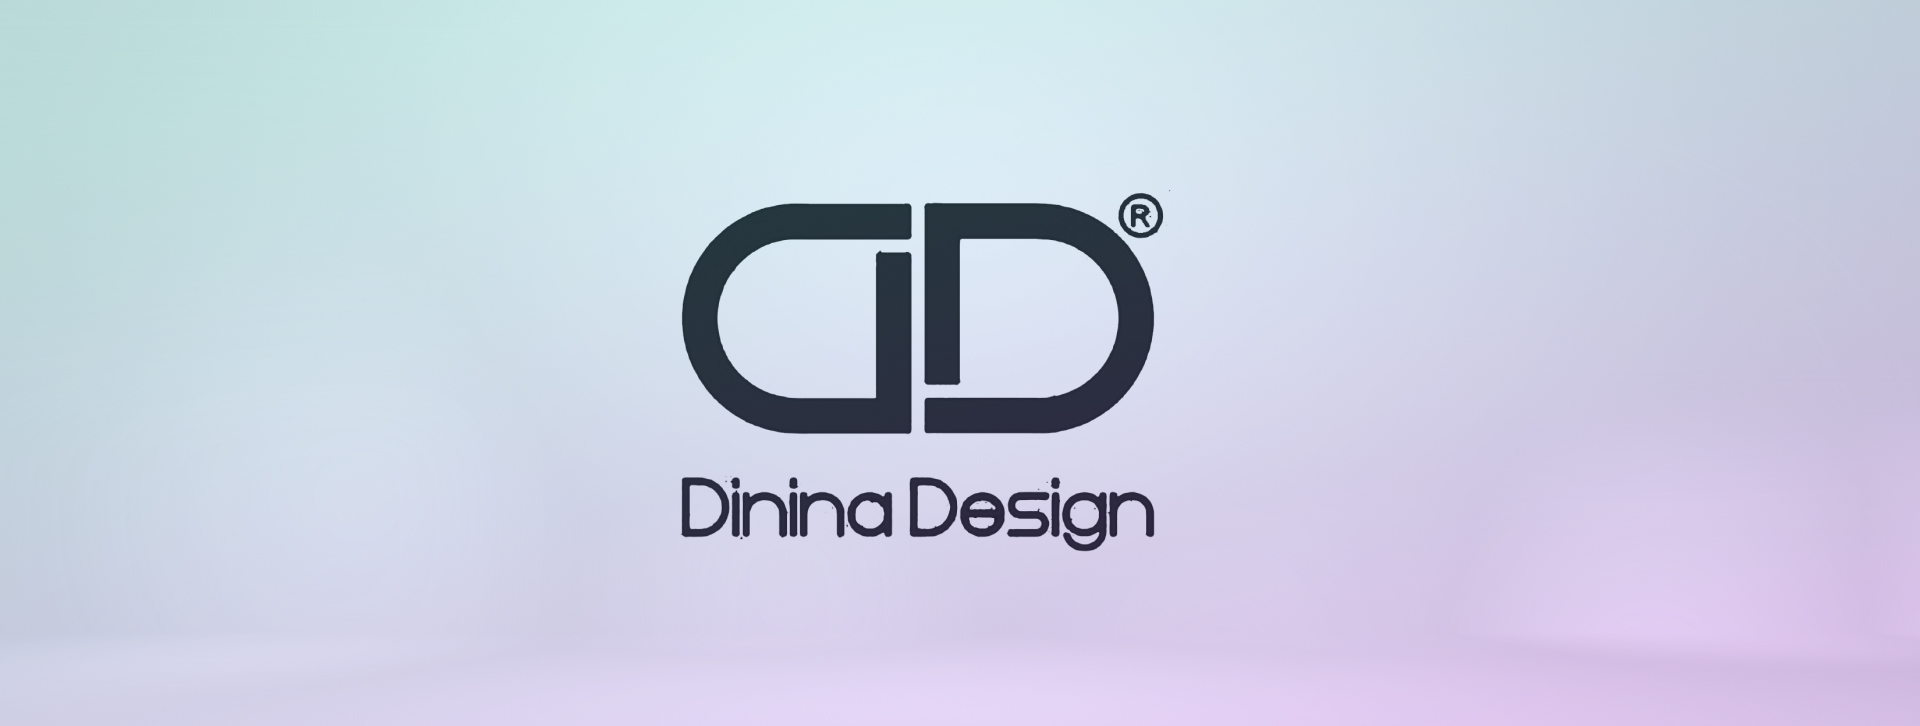 Dinina Design